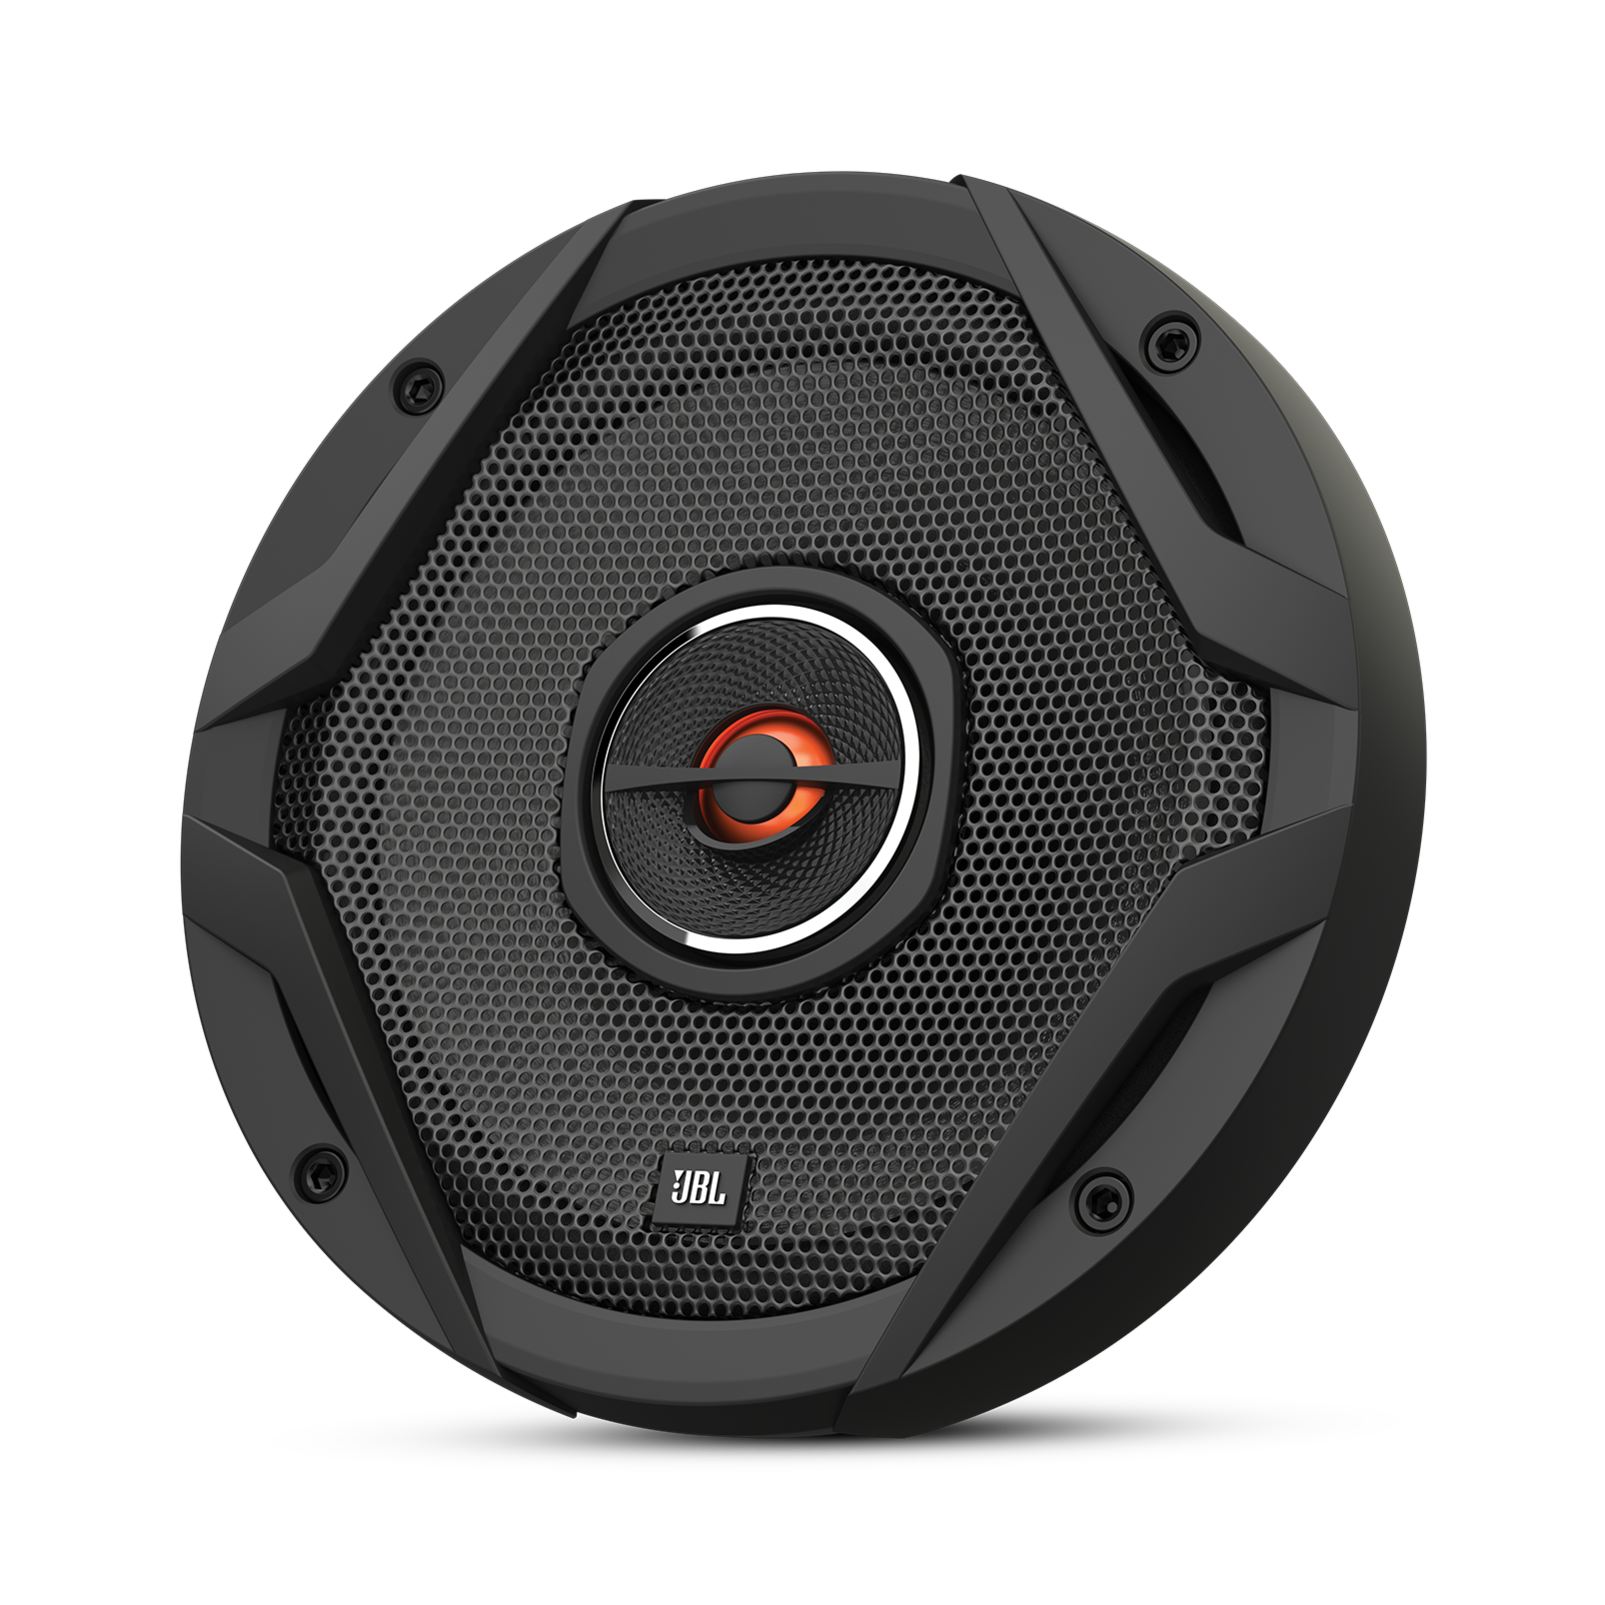 GX602 - Black - 6-1/2" coaxial car audio loudspeaker, 180W - Hero